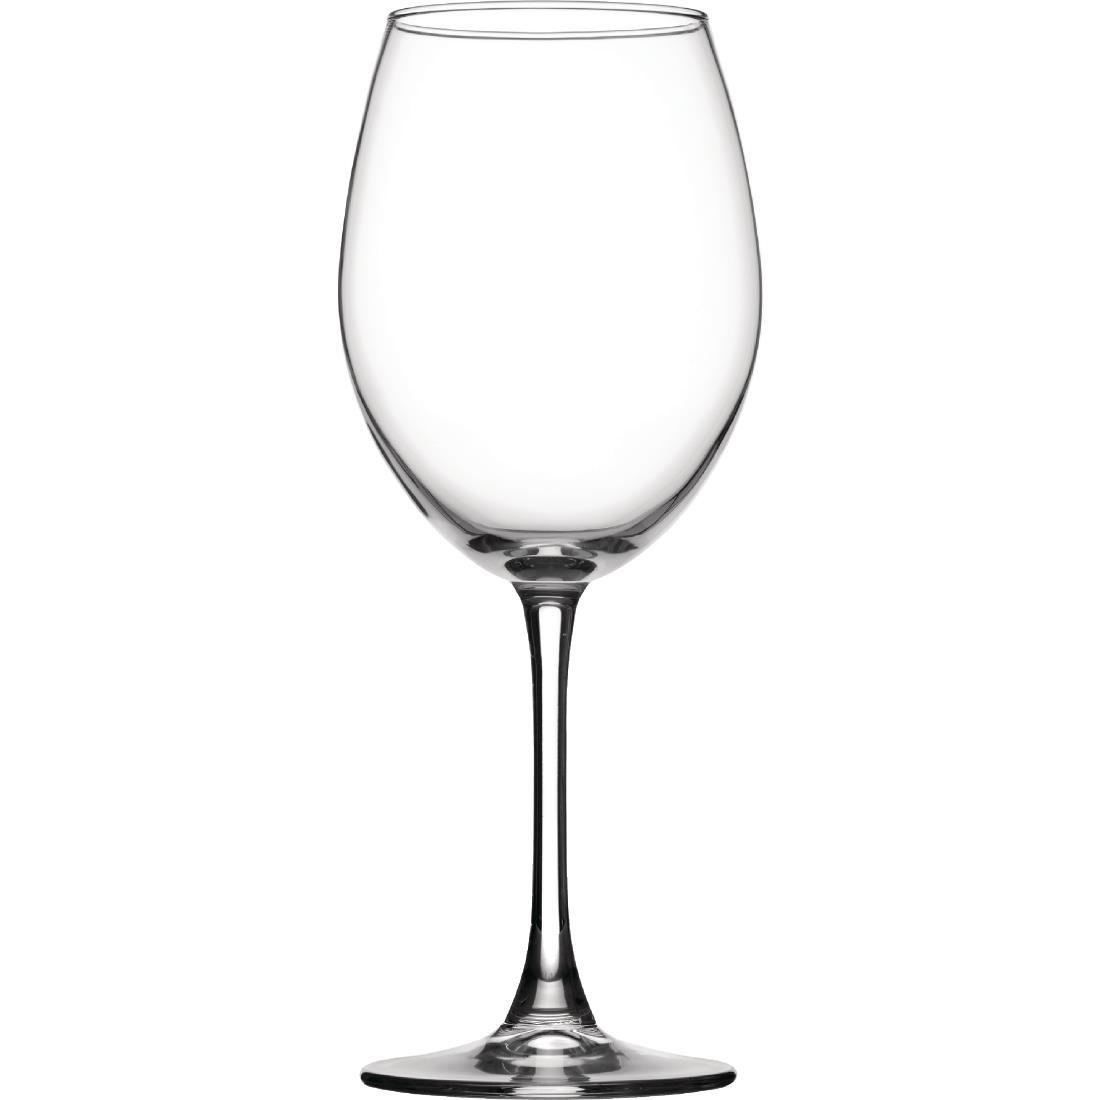 Utopia Enoteca Wine Glasses 615ml (Pack of 6) - CC998  - 1